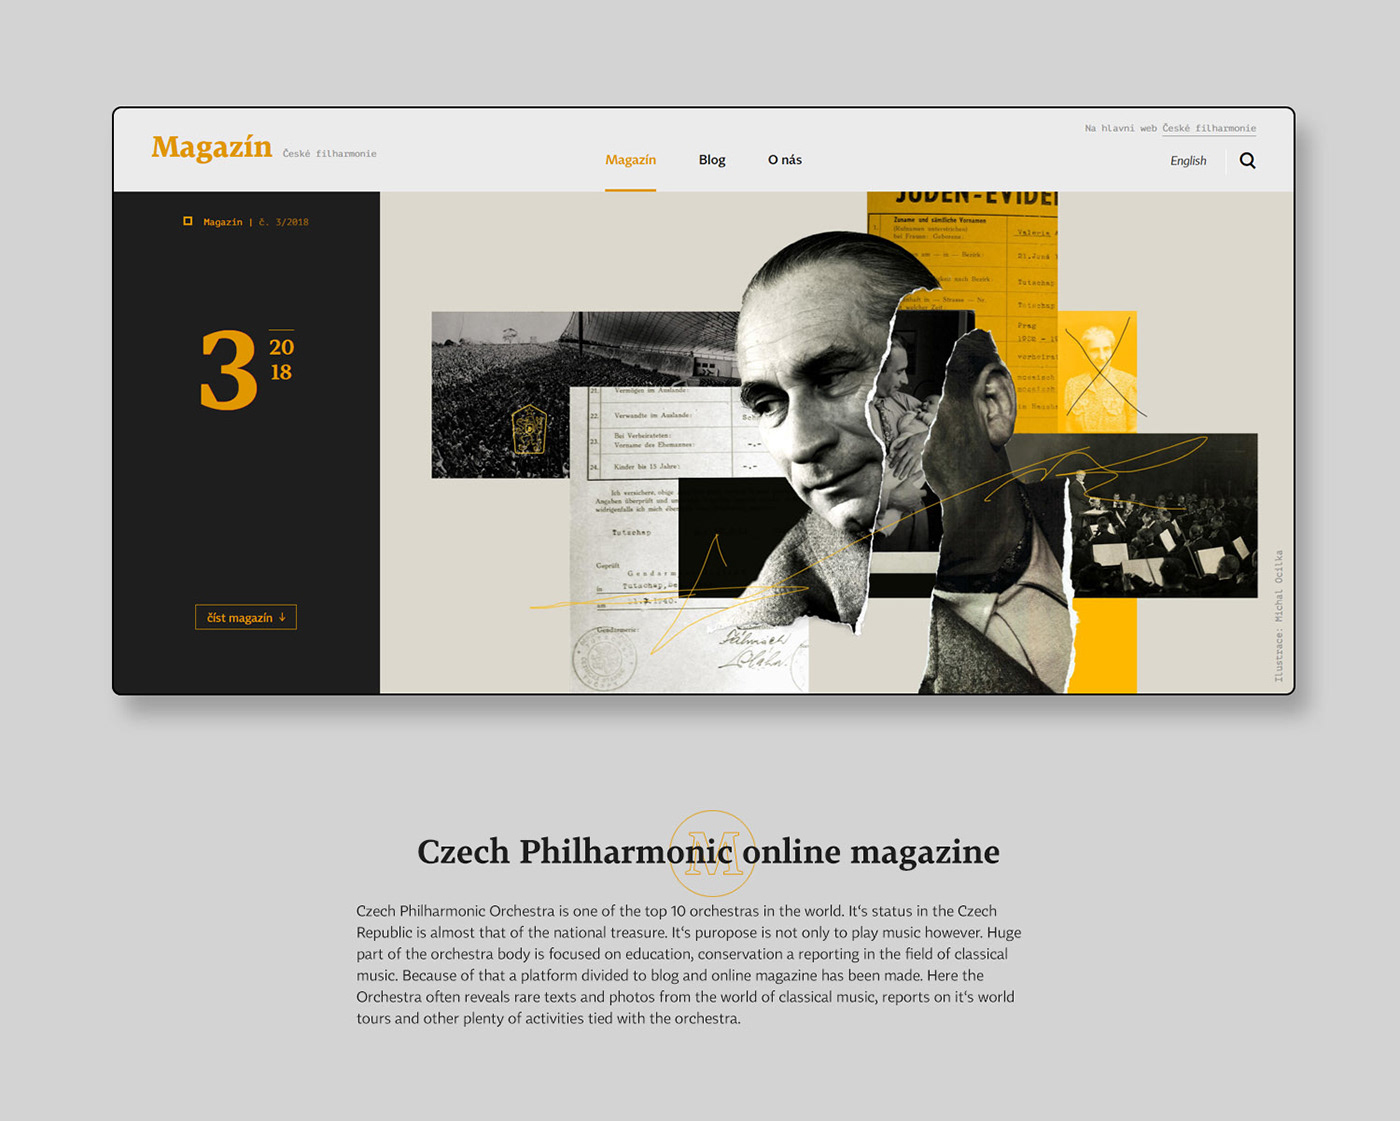 philharmonic magazine online magazine collage cezch philharmonic philharmonic orchestra